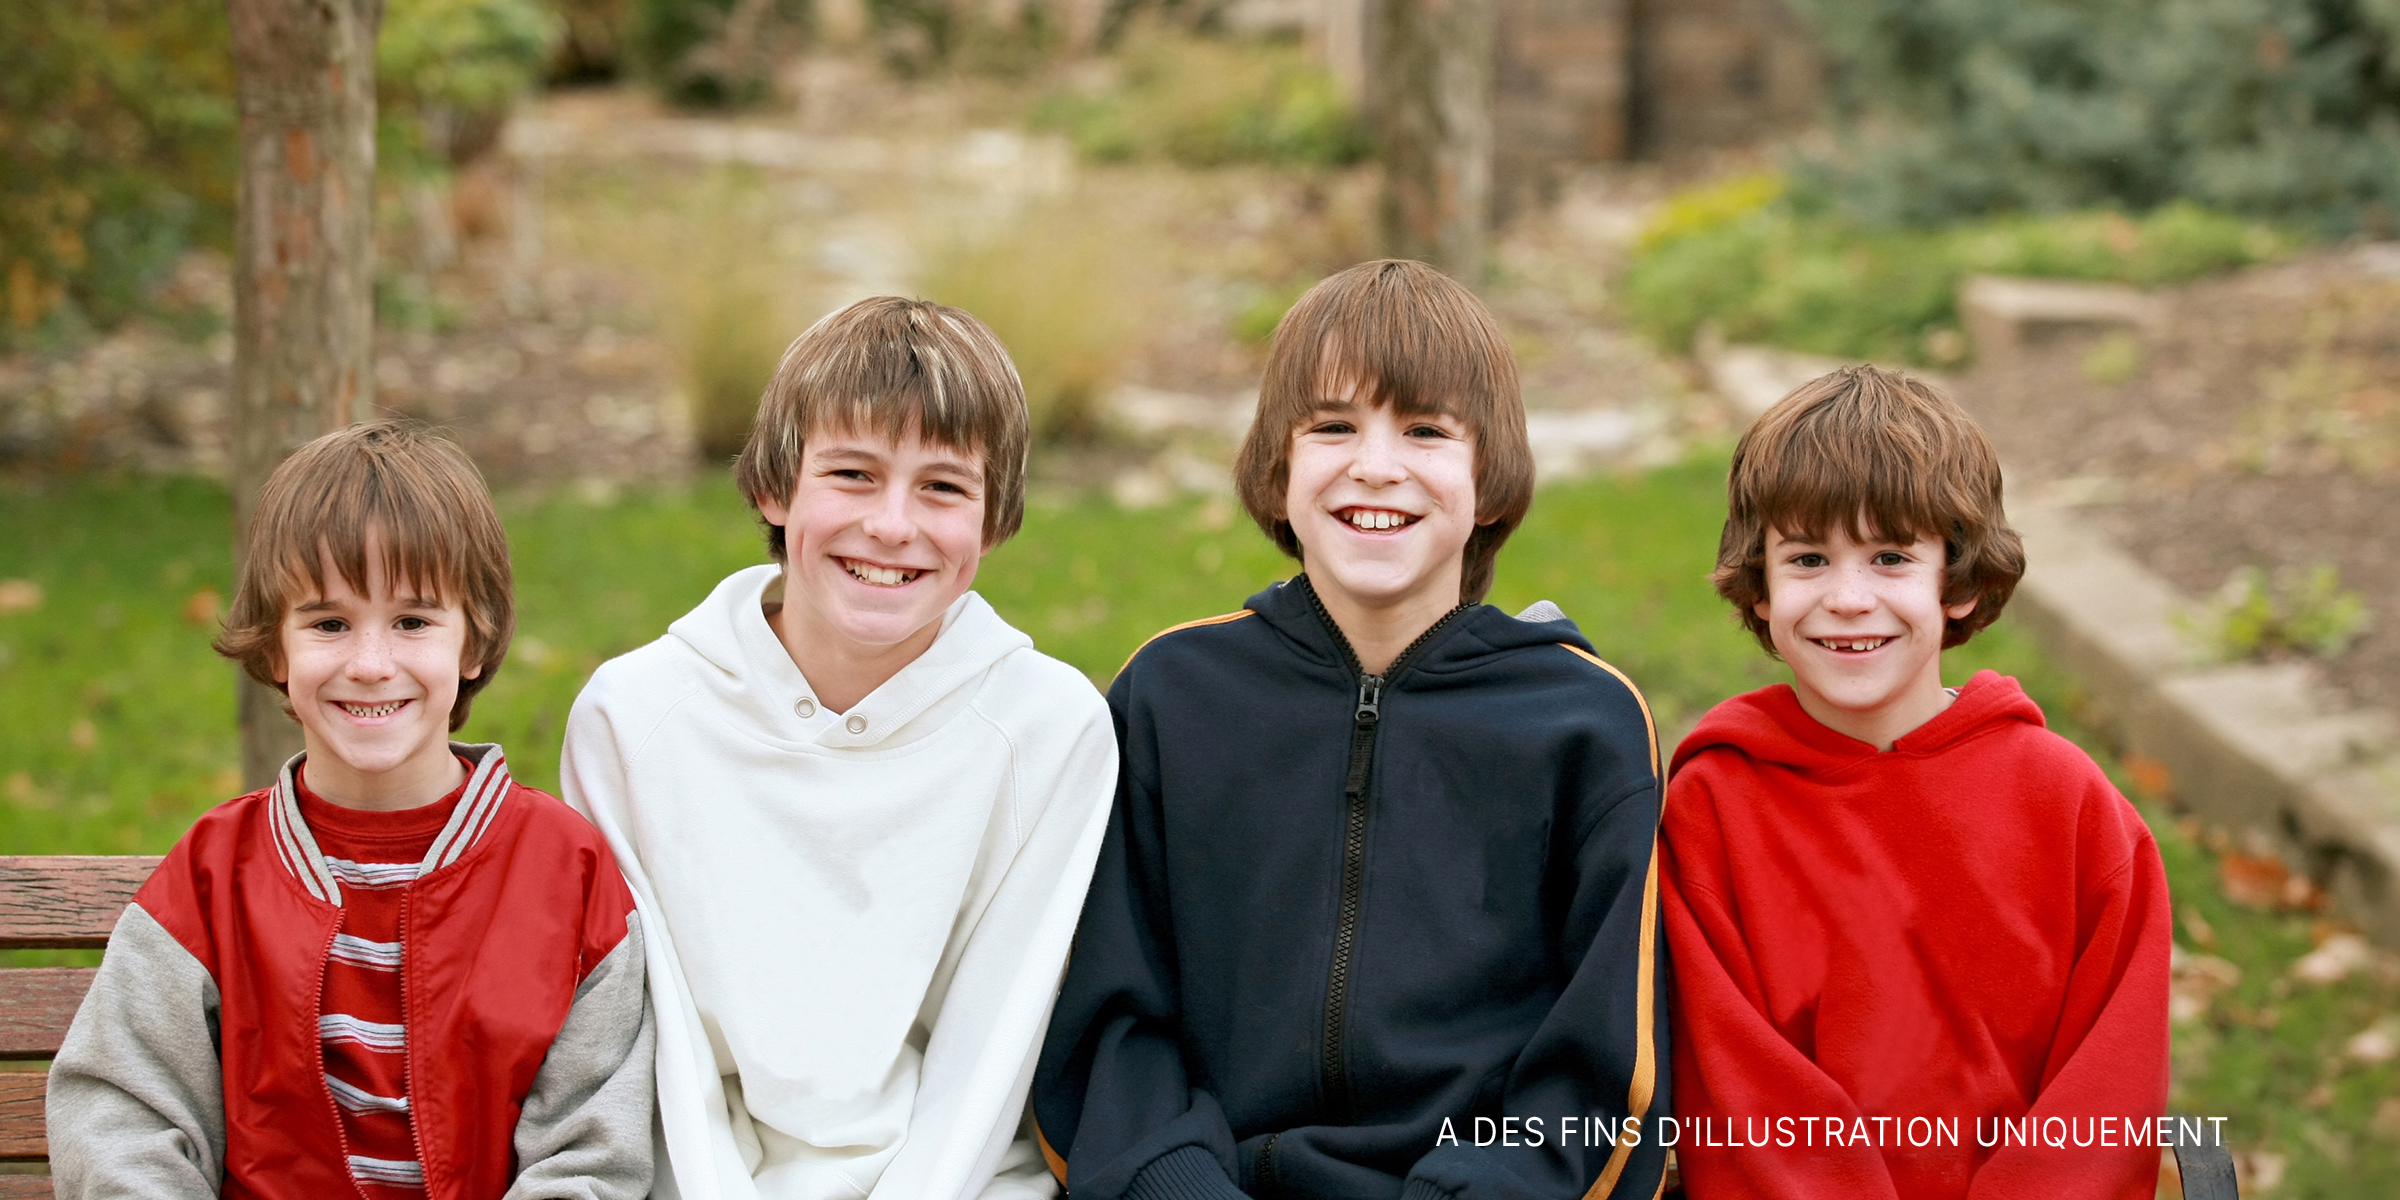 Quatre garçons qui posent en souriant | Source : Shutterstock